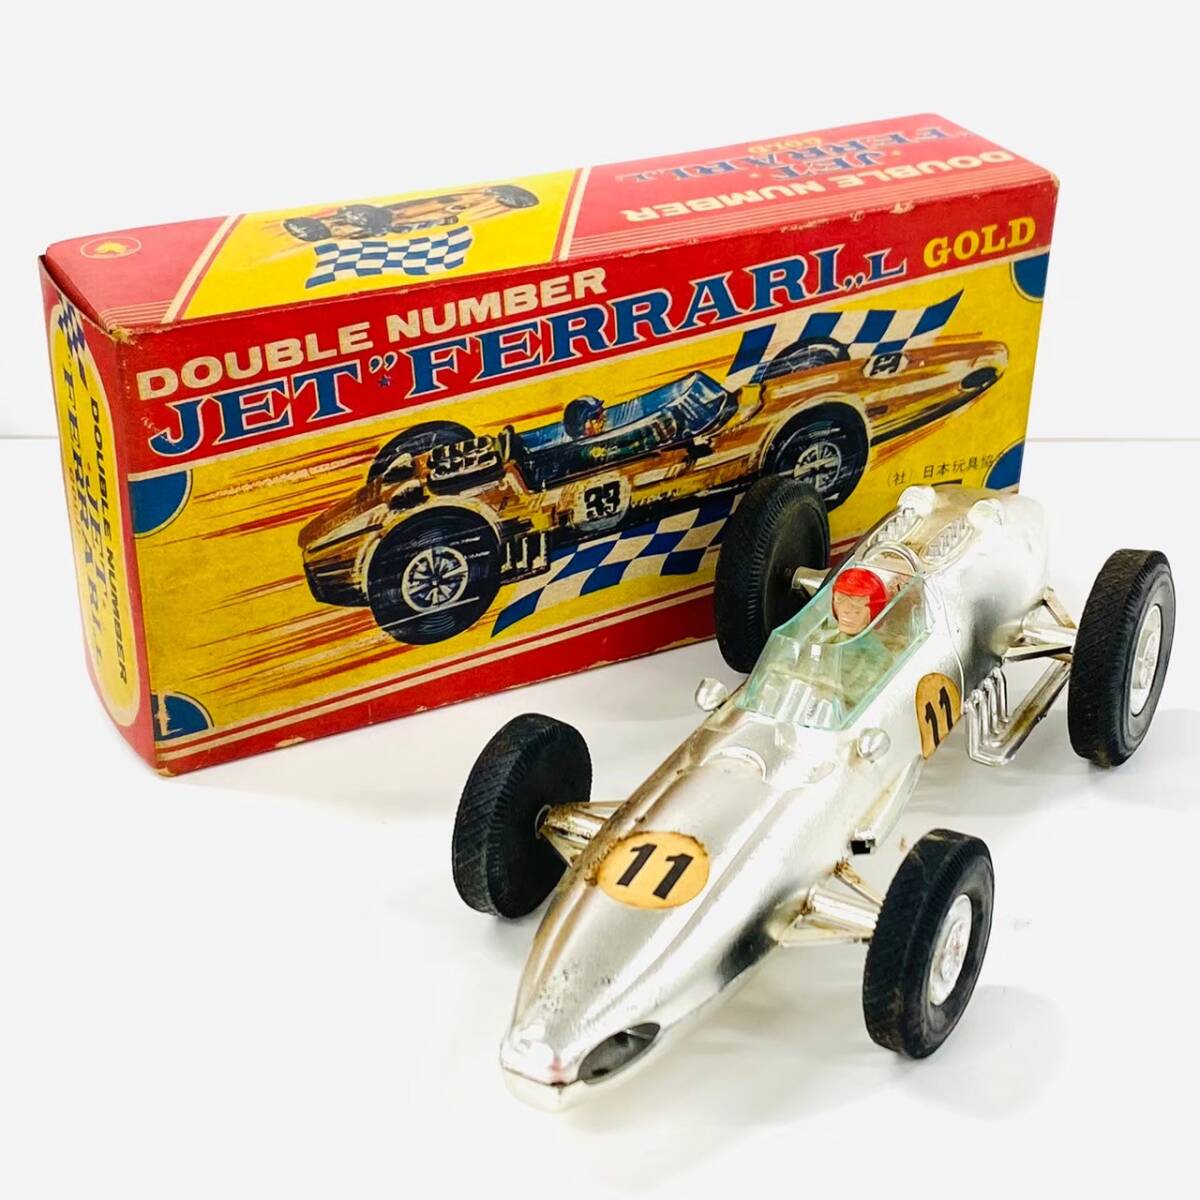 G667-Z9-594 DOUBLE NUMBER ダブルナンバー ジェット フェラーリ L ゴールド 箱付き 葉巻型 日本製 ヴィンテージ おもちゃ 玩具 ④の画像1